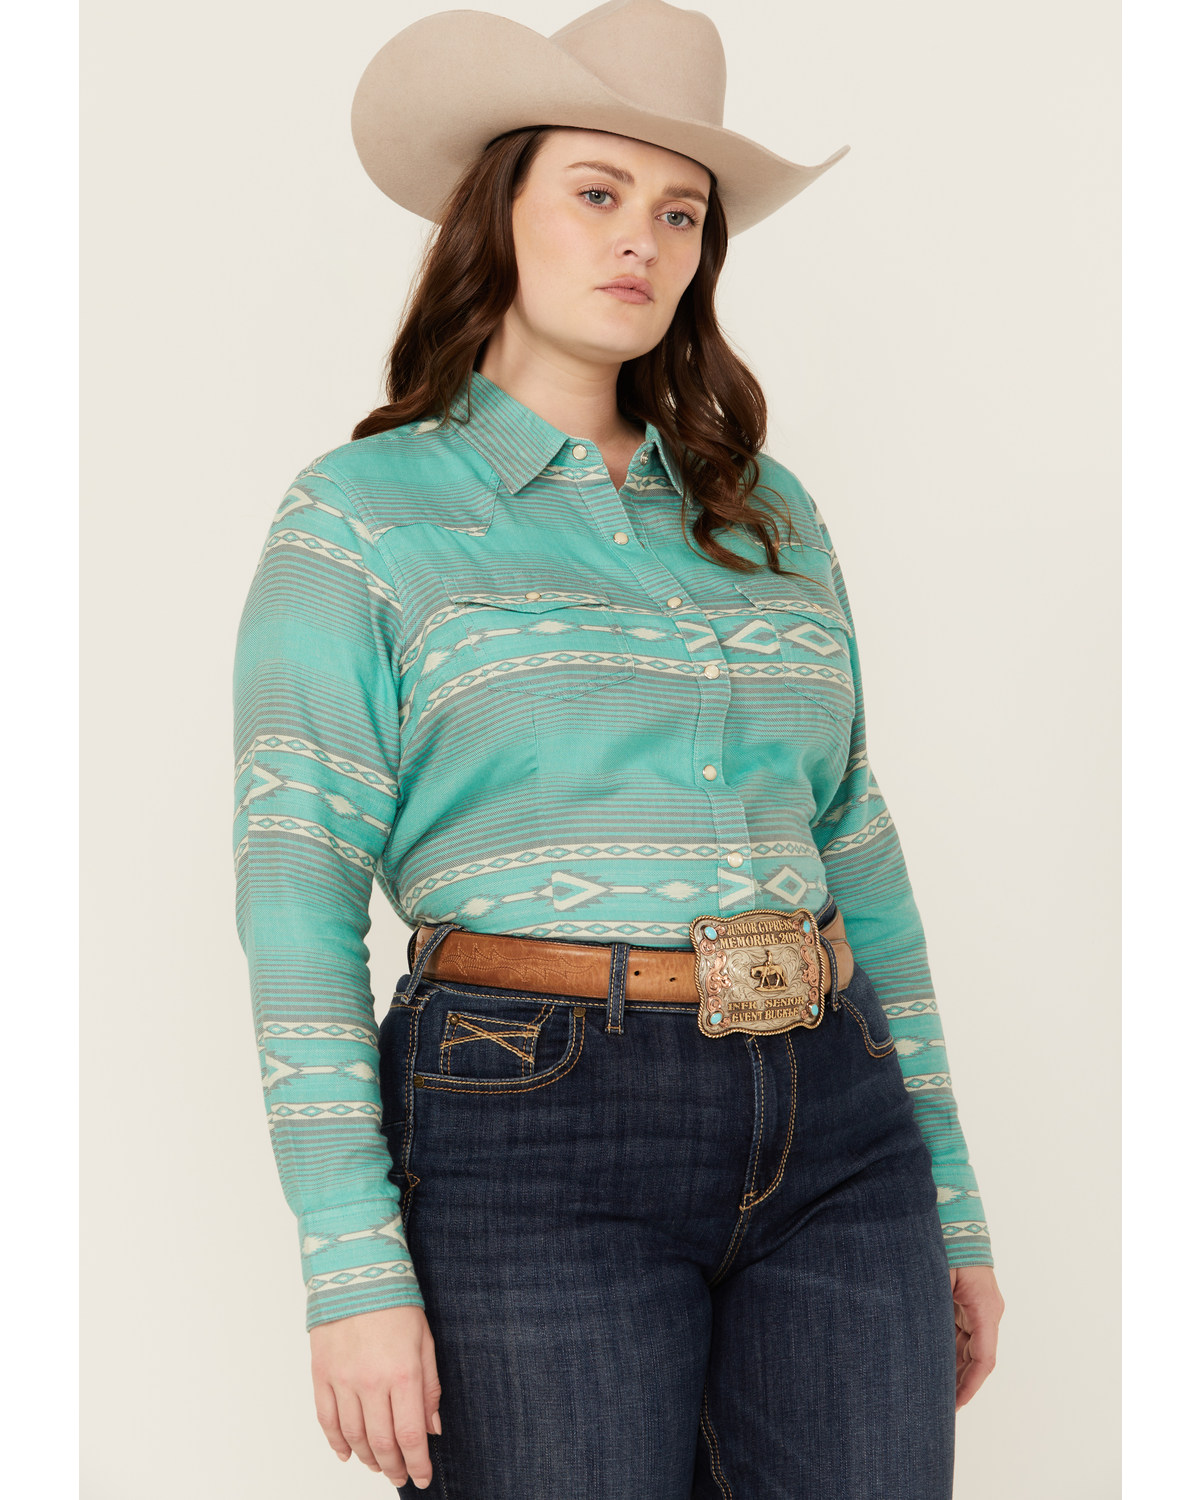 Ariat Women's R.E.A.L Jadeite Jacquard Southwestern Print Long Sleeve Snap Western Shirt - Plus